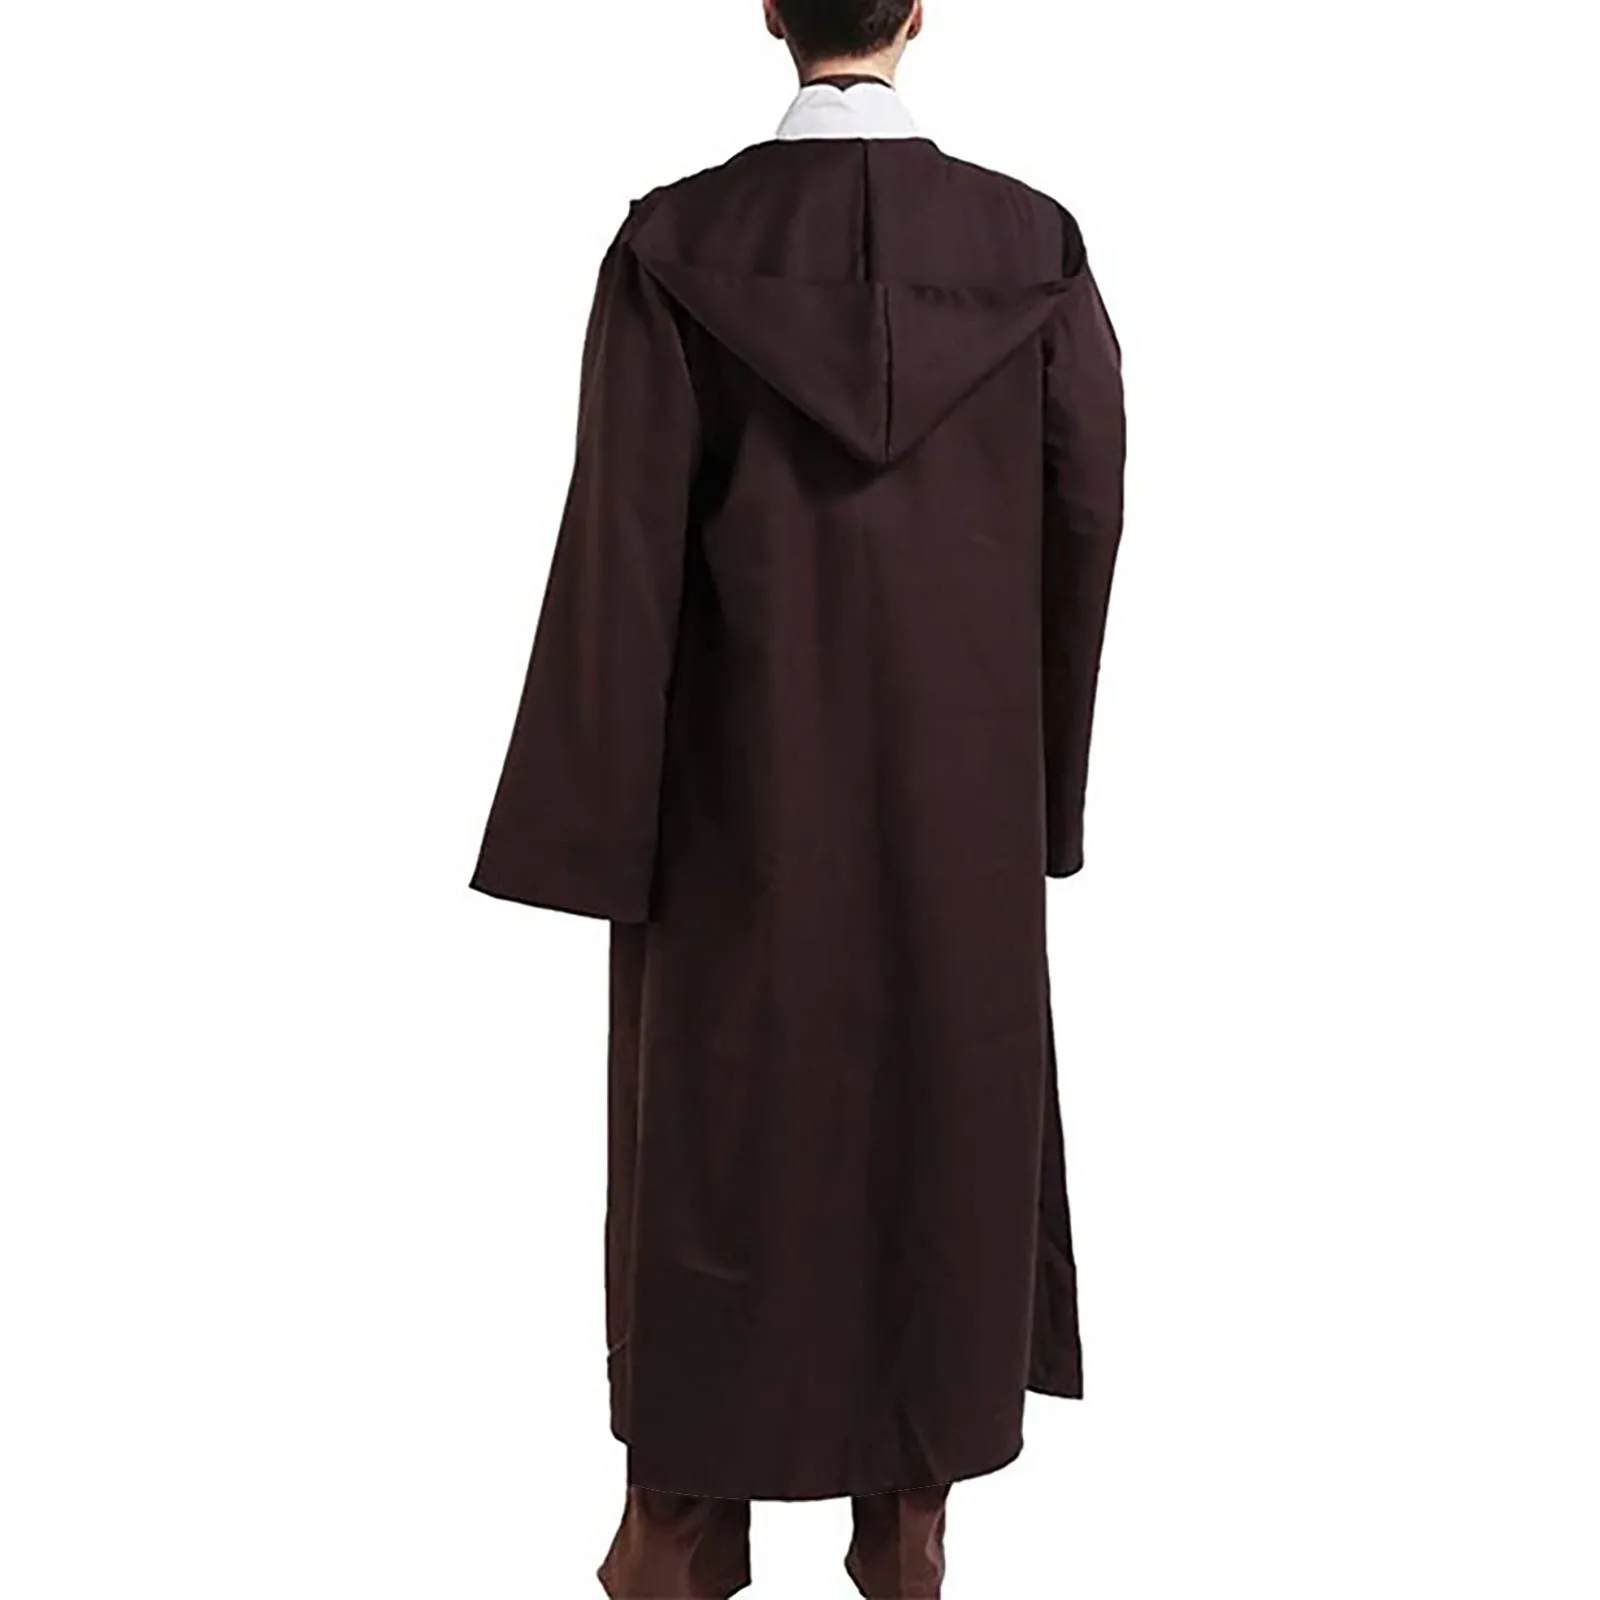 Fashion Halloween Costume Men Solid Colors Long Sleeve Hooded Loose Long Coat Cosplay Vintage Outwear Cardigan Cloak Jacket#g3